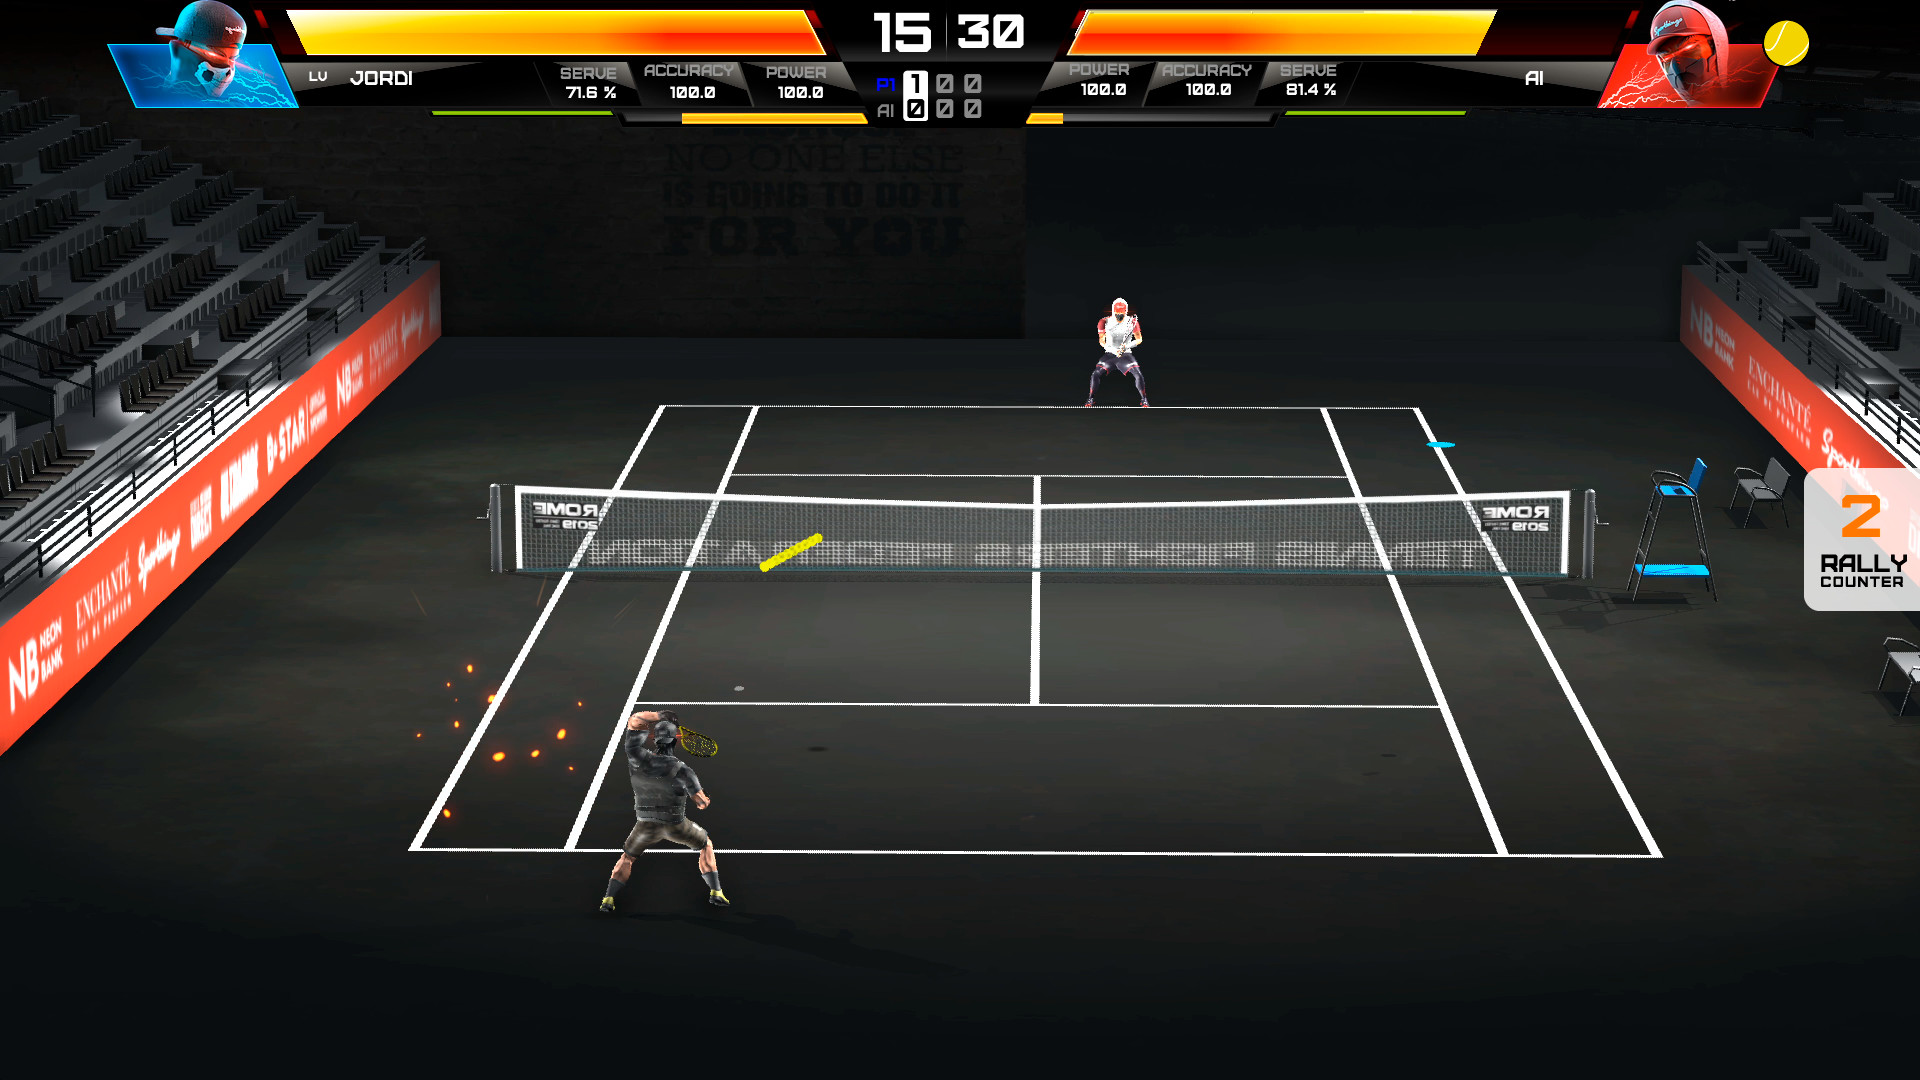 Tennis Fighters screenshot